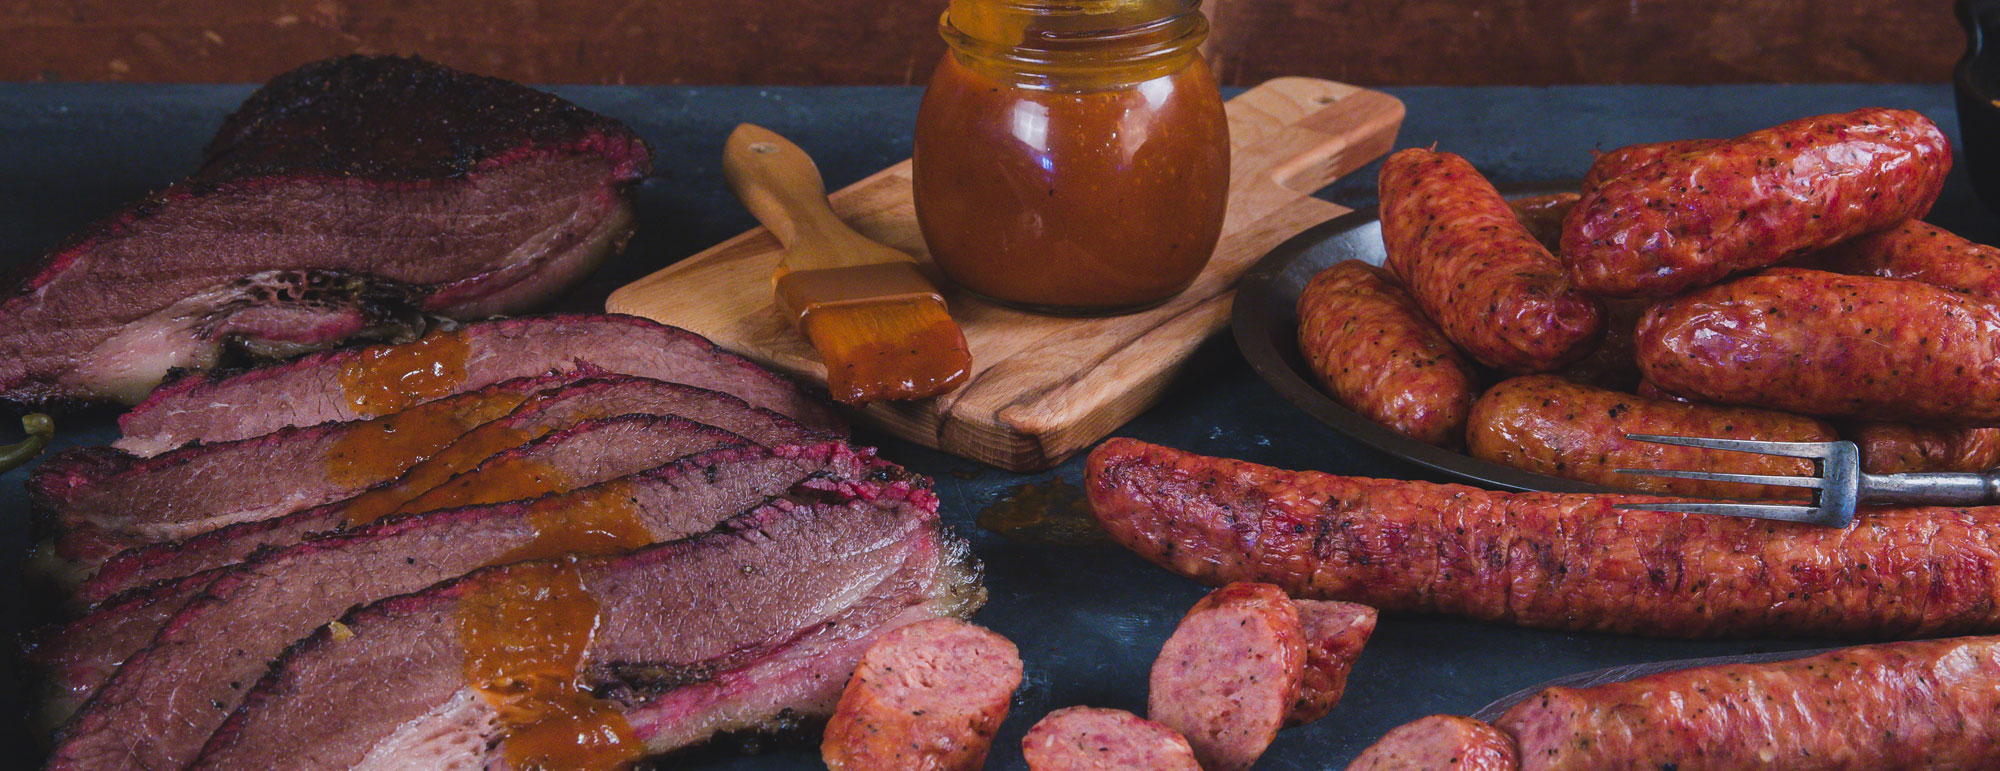 Meyer's BBQ Brisket & Sausage Links with Jar of BBQ Sauce